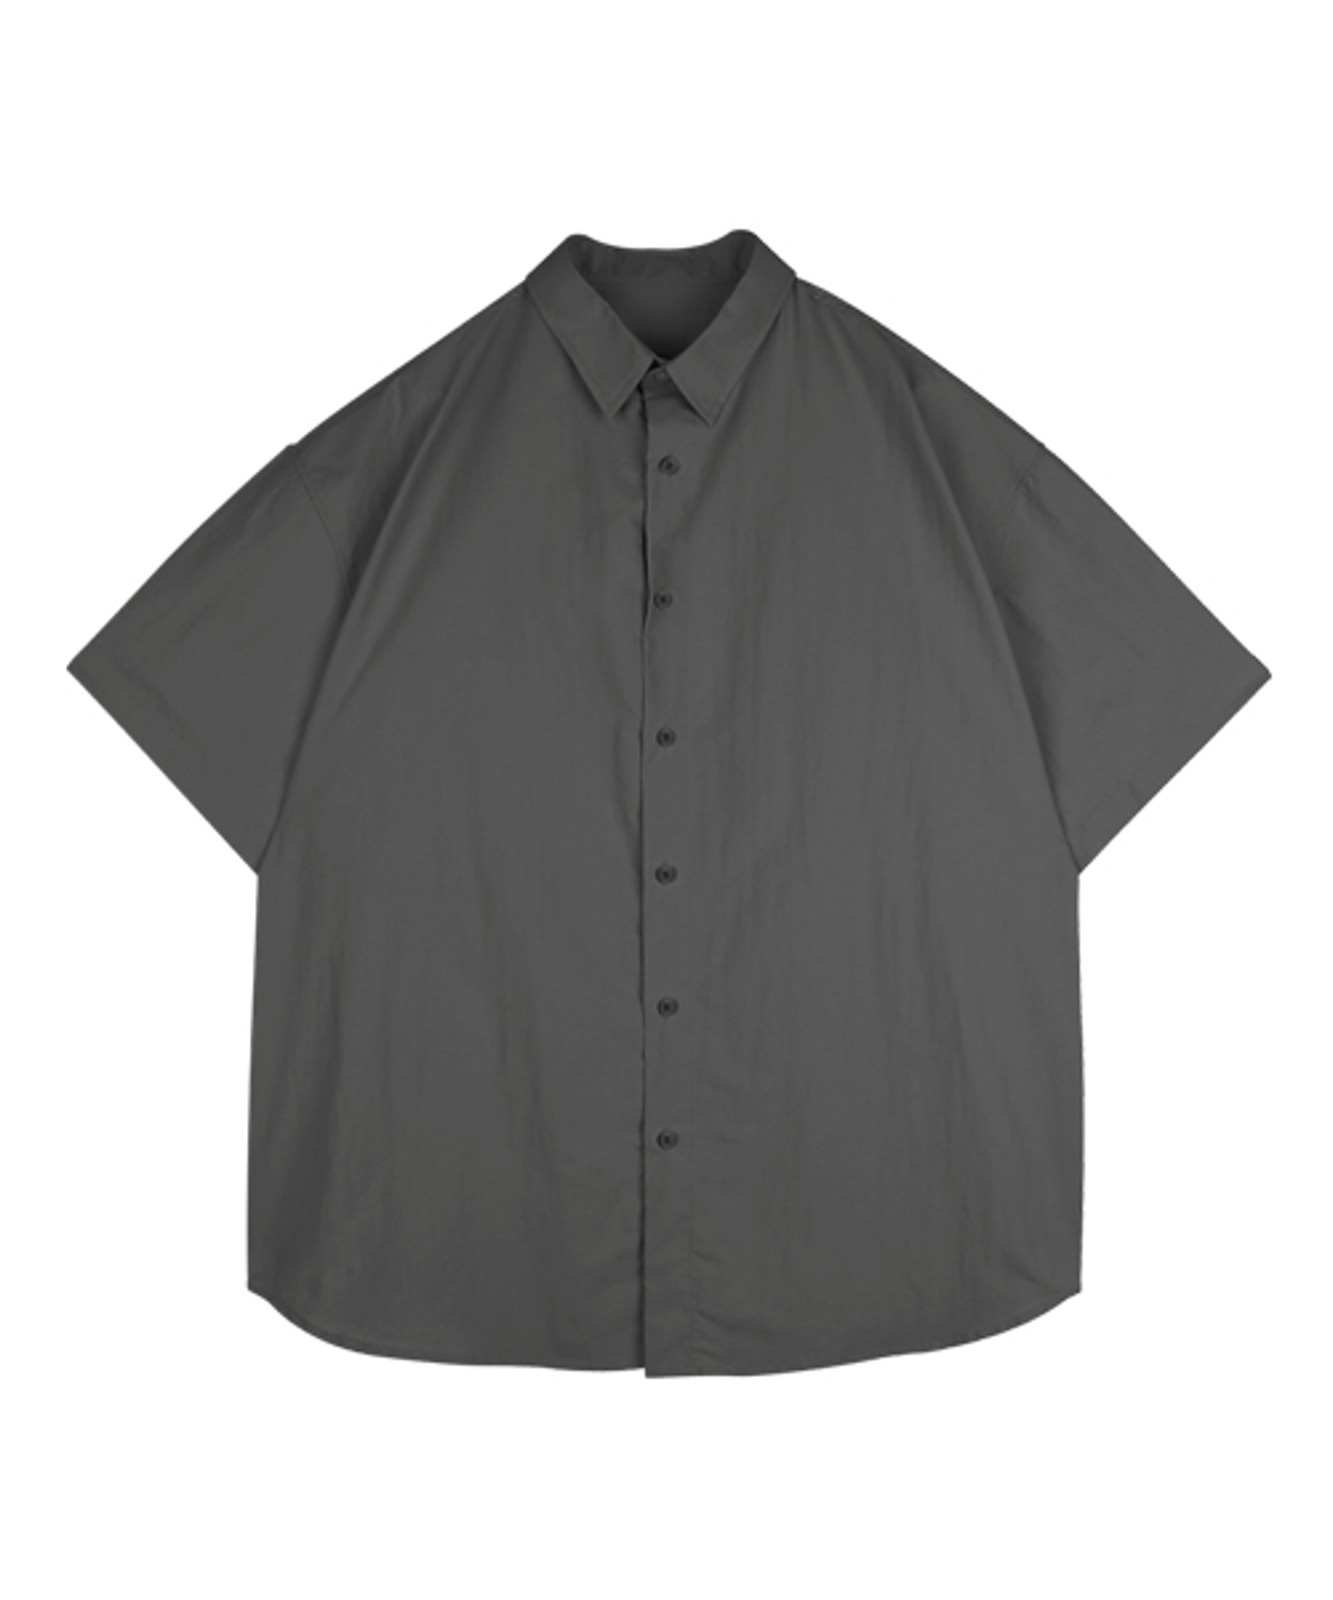 V1011 썸머 나일론 캐트릿 셔츠 (차콜)